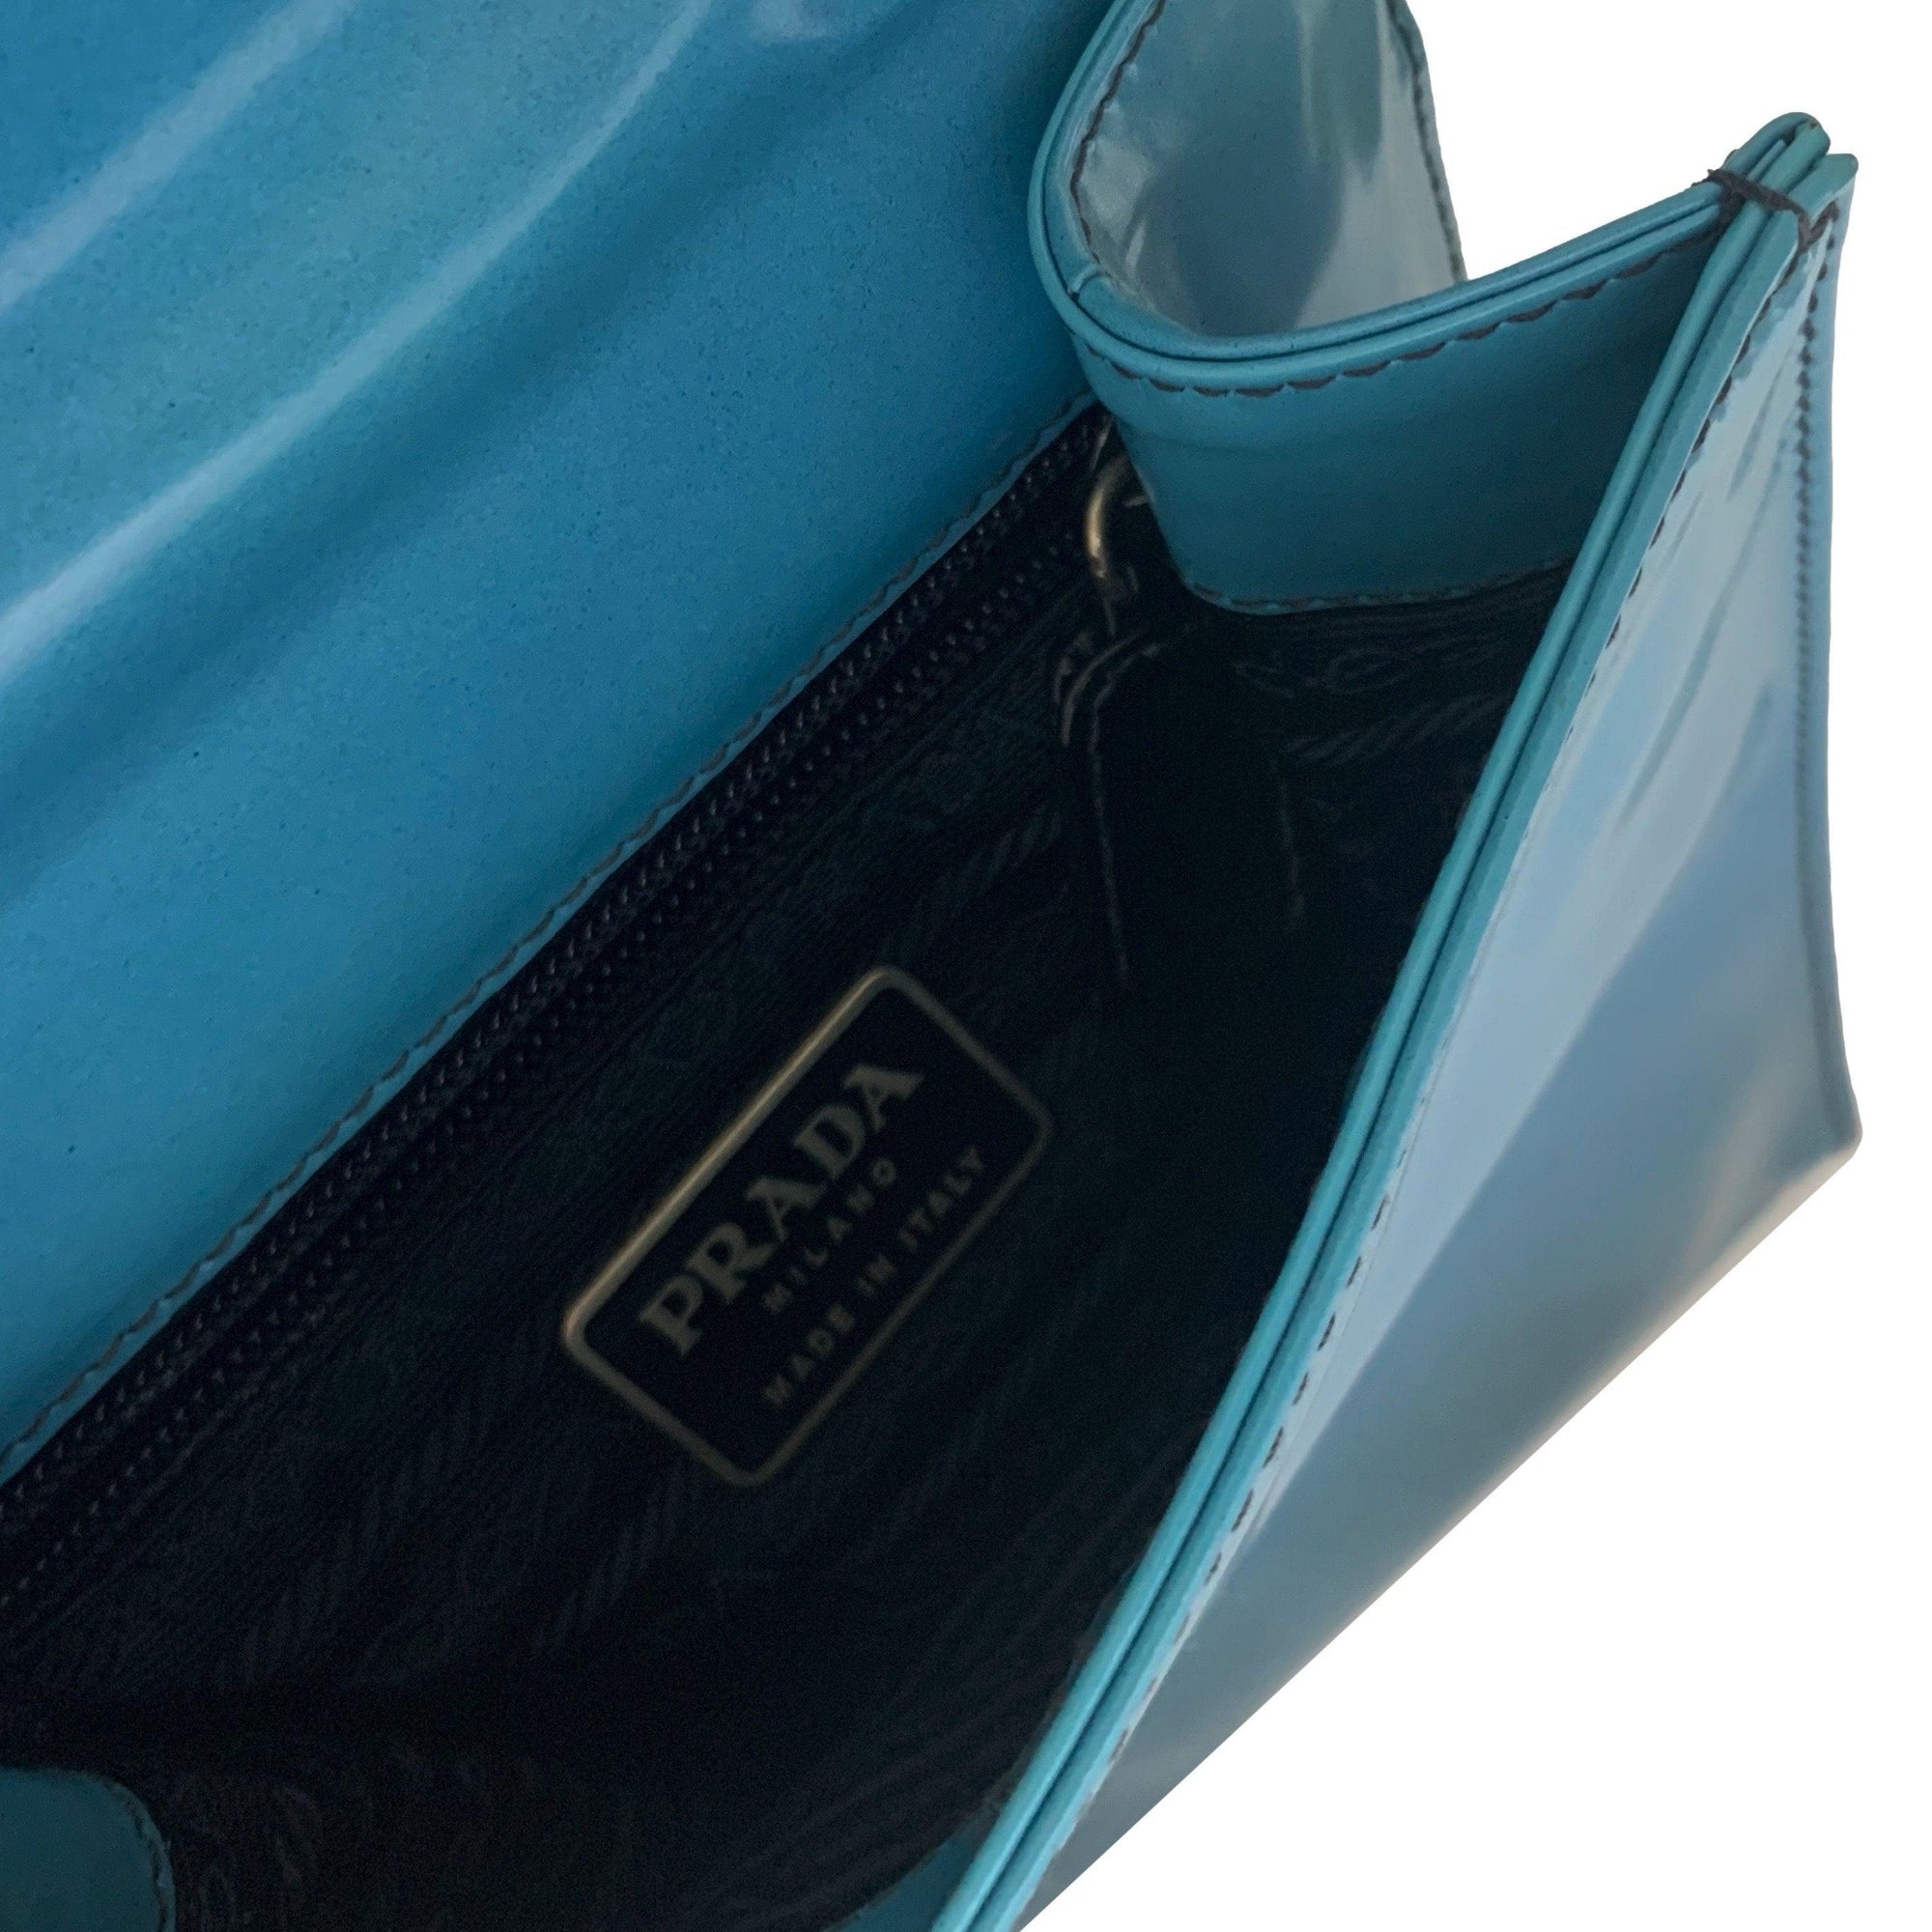 Prada Blue Ombre Top Handle Bag - Handbags